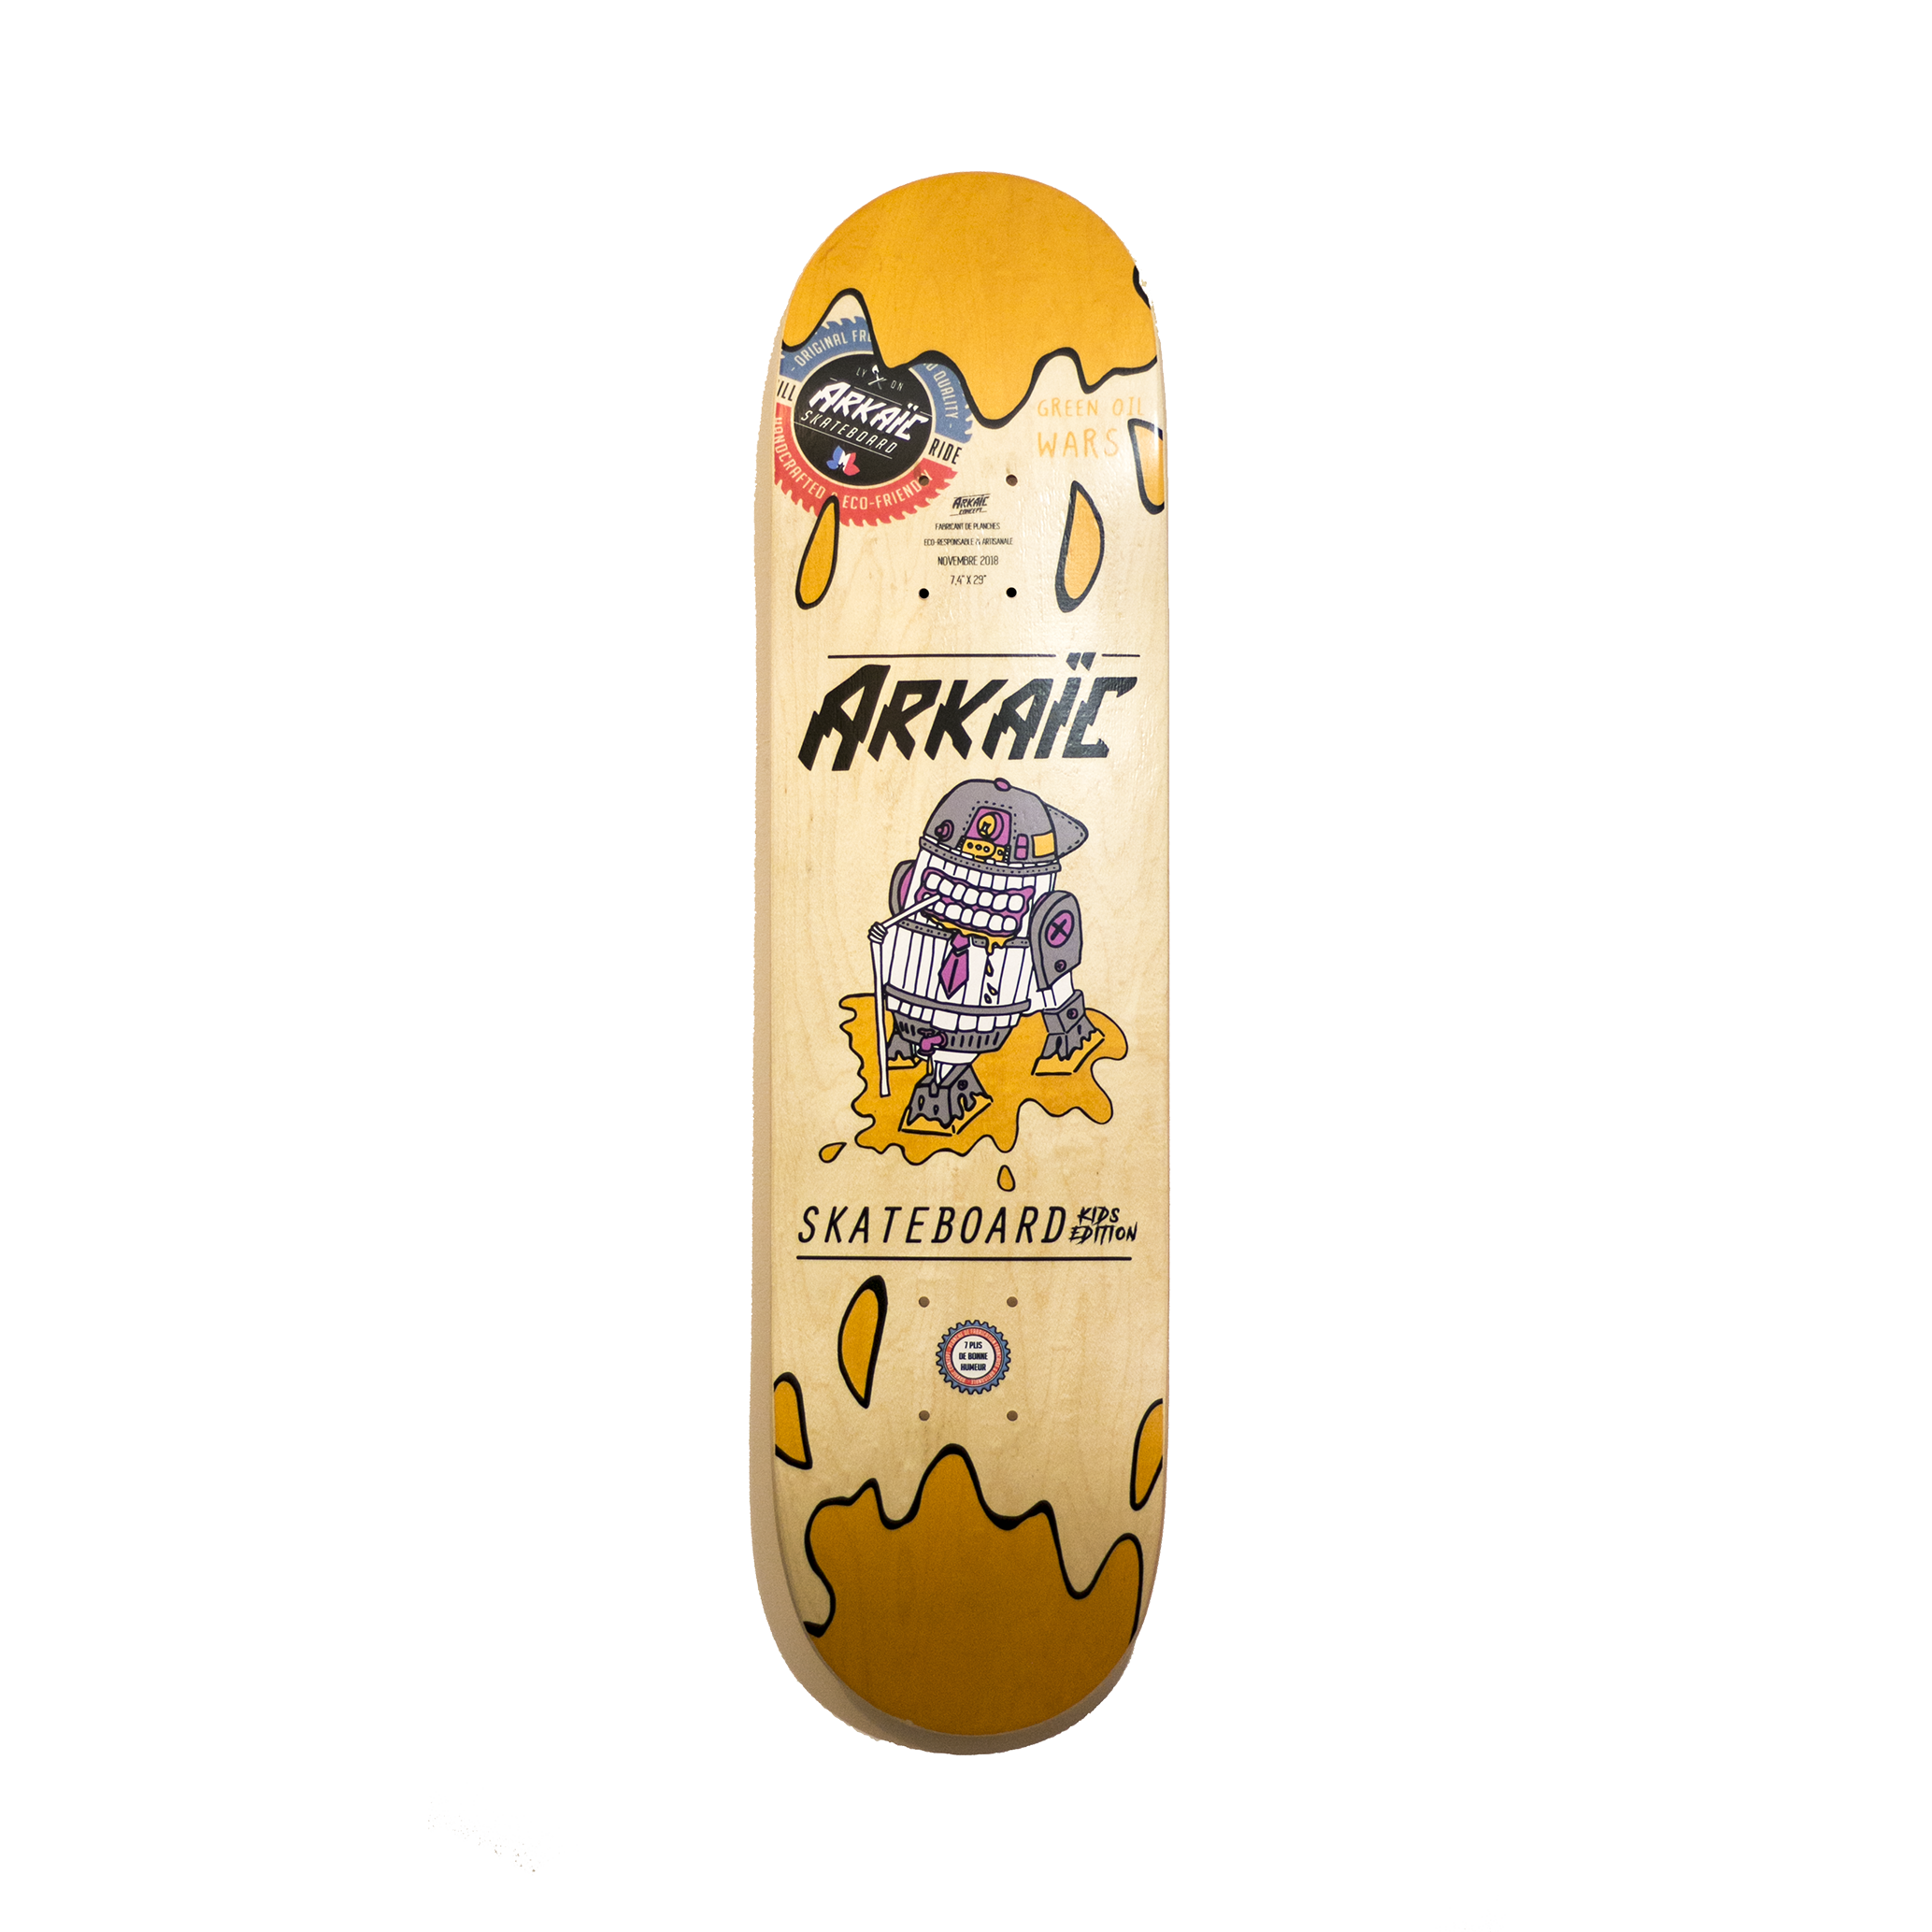 kids edition arkaic skateboard made in france collaboration loic benoit